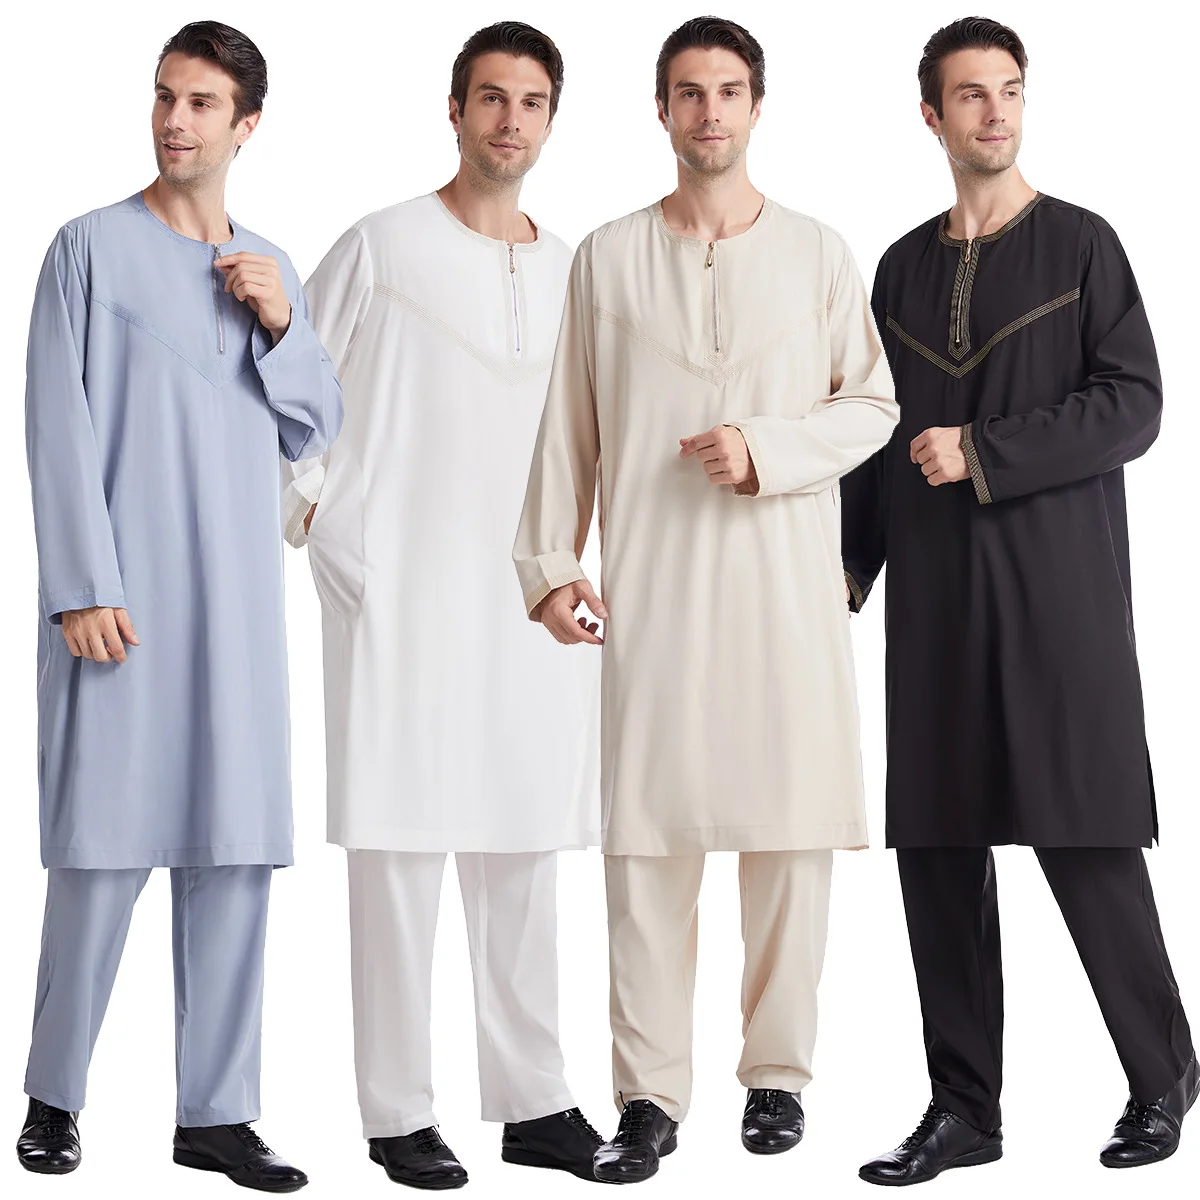 Men Jubba Thobe Muslim Dress Islamic Traditional Cloth For Male Abaya Top Pants Set Fashion Patchwork Saudi Arab Prayer Costume